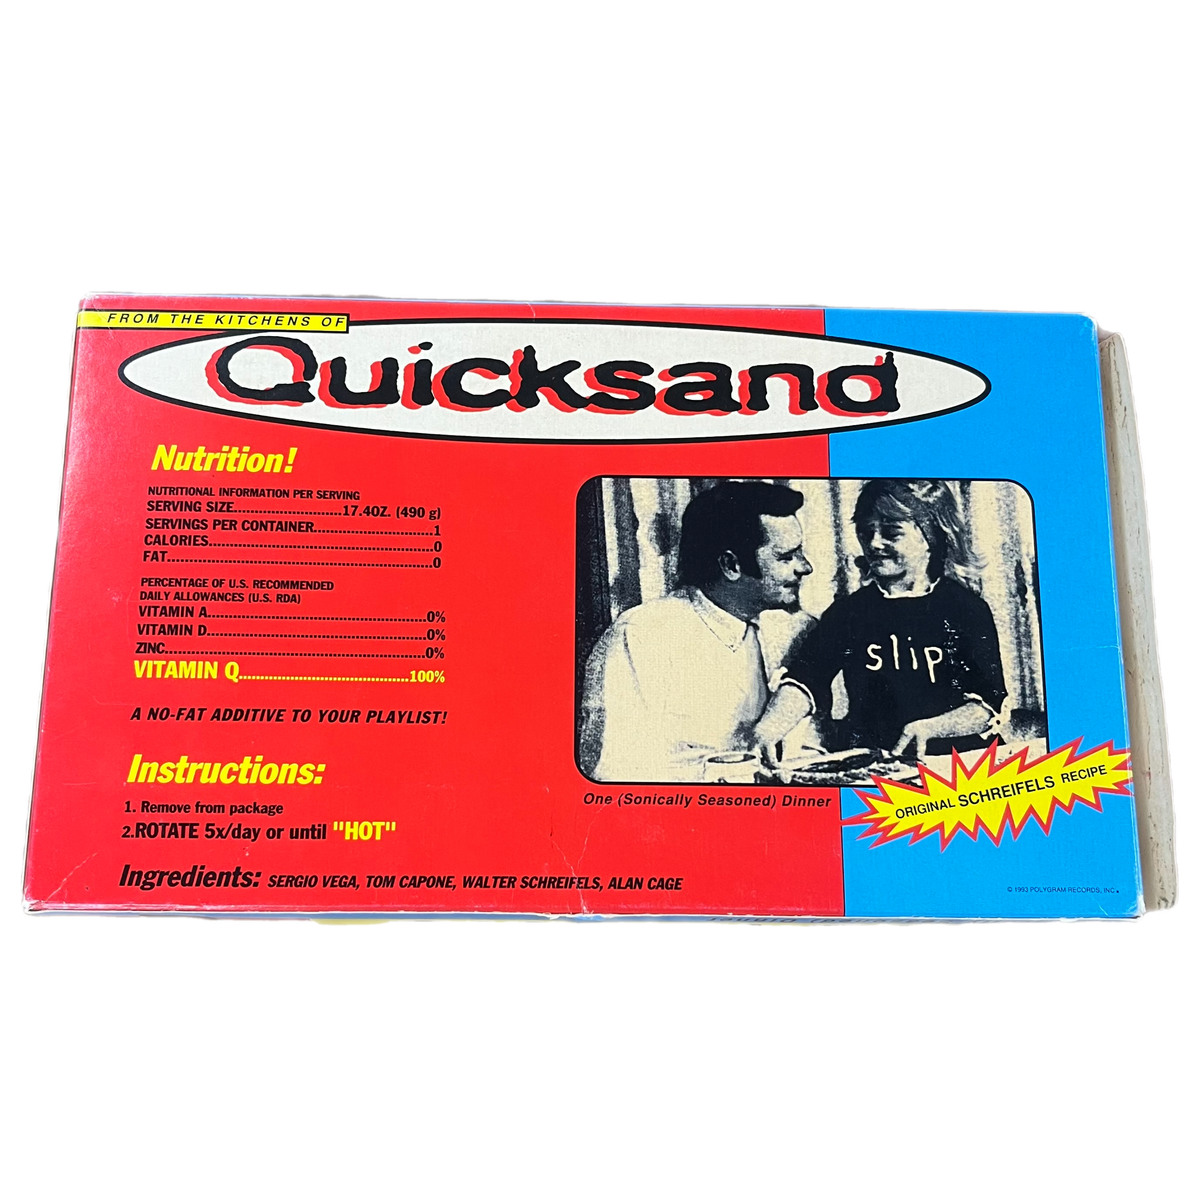 Vintage Quicksand &quot;Dine Alone&quot; TV Dinner Promo 2